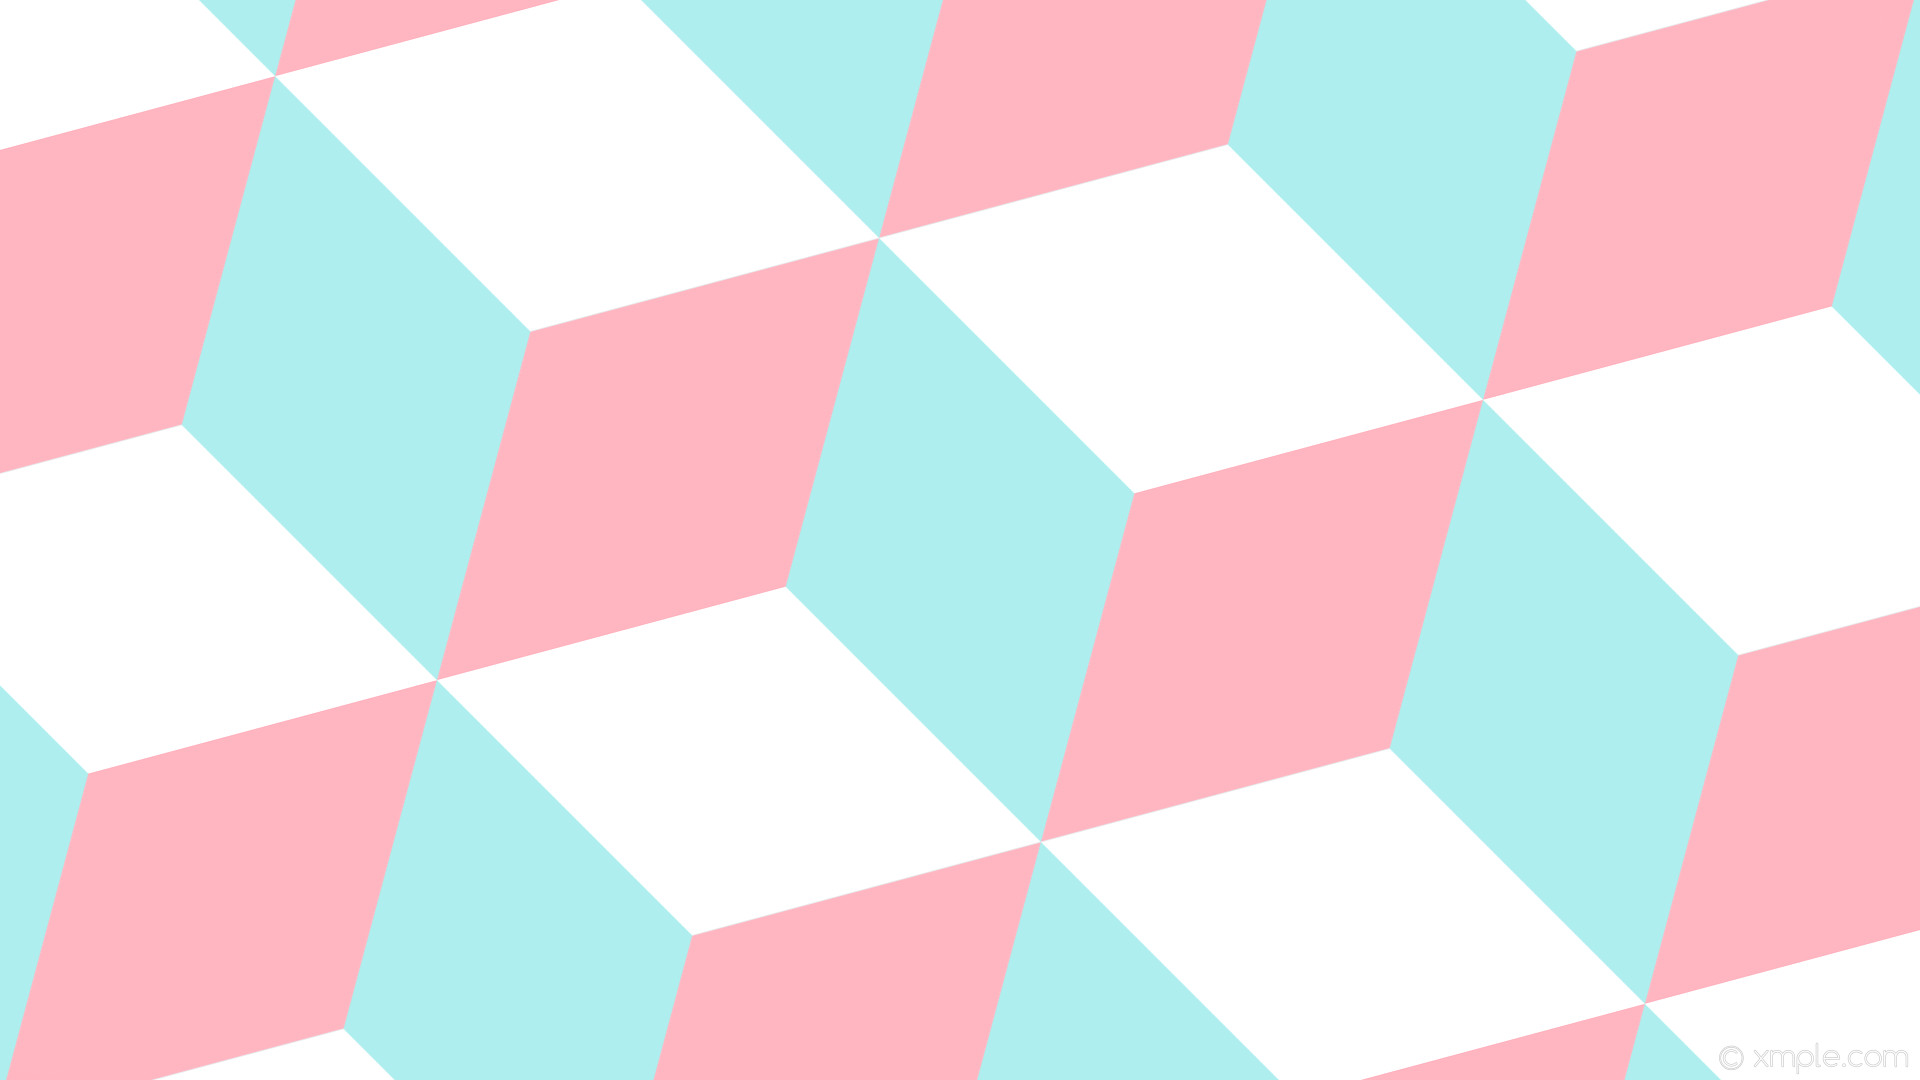 Wallpaper 3d cubes blue white pink pale turquoise light pink #afeeee #ffb6c1 #ffffff